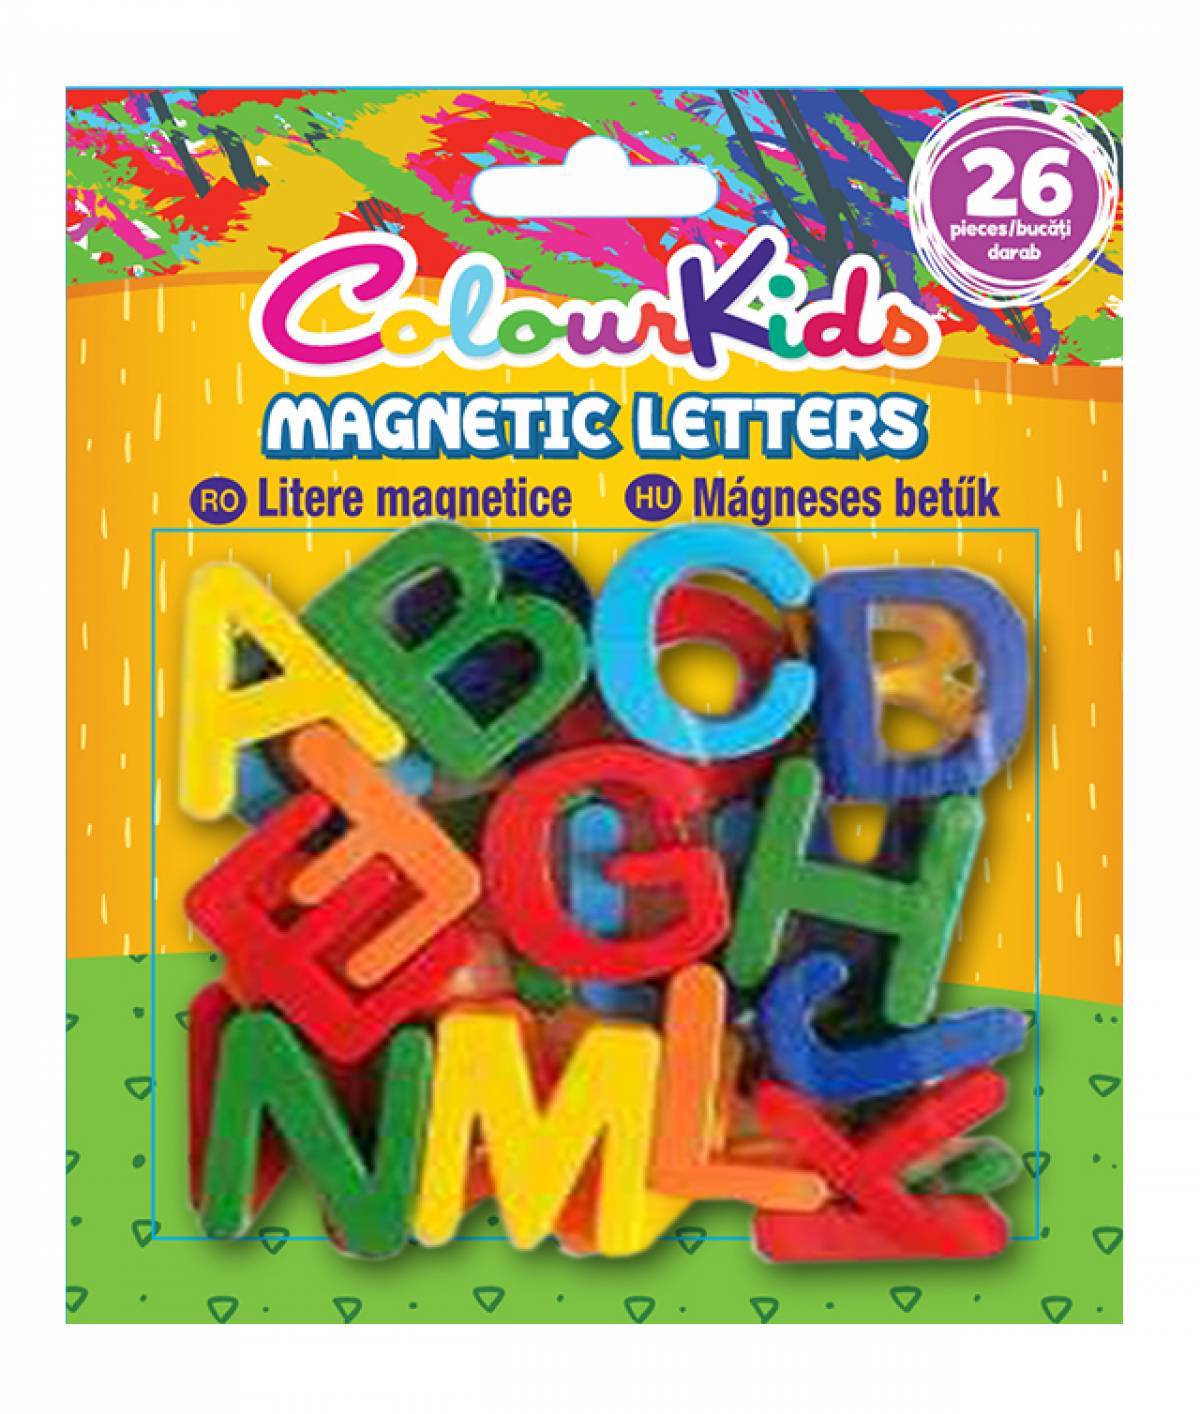 Litere magnetice CK set 26 piese 4cm diverse culori